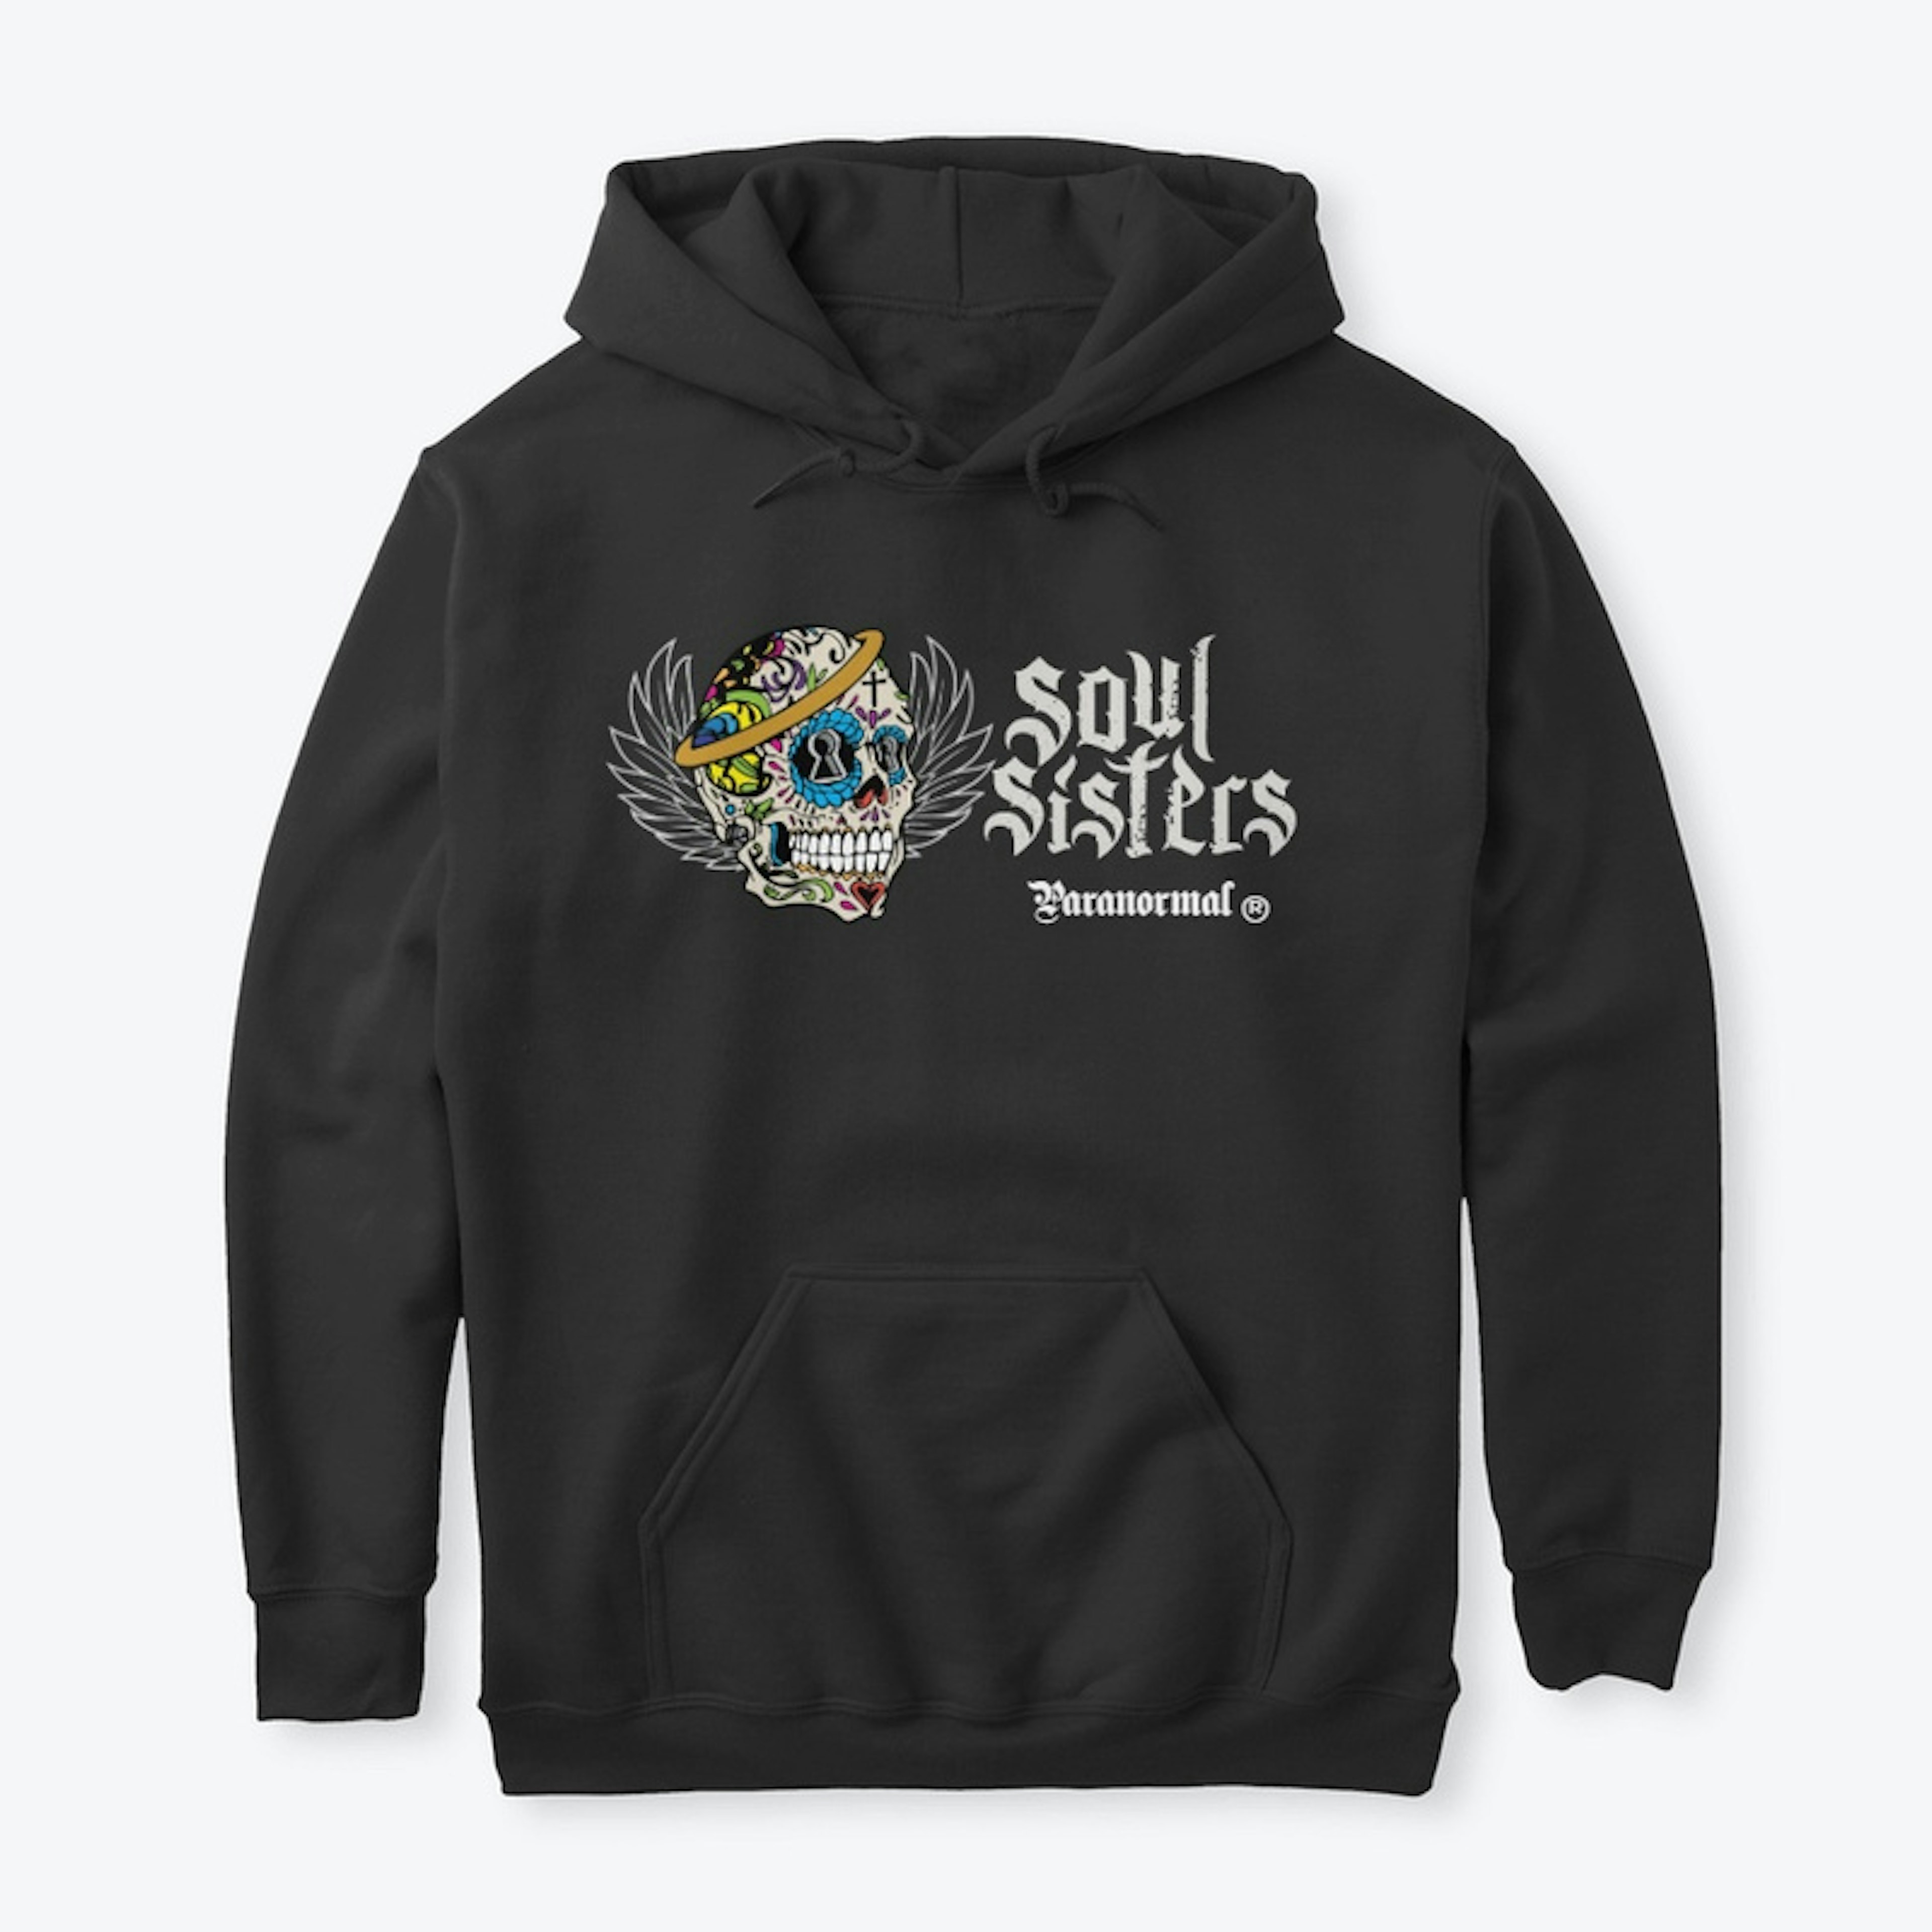 Soul Sisters Paranormal - Tshirt (color)